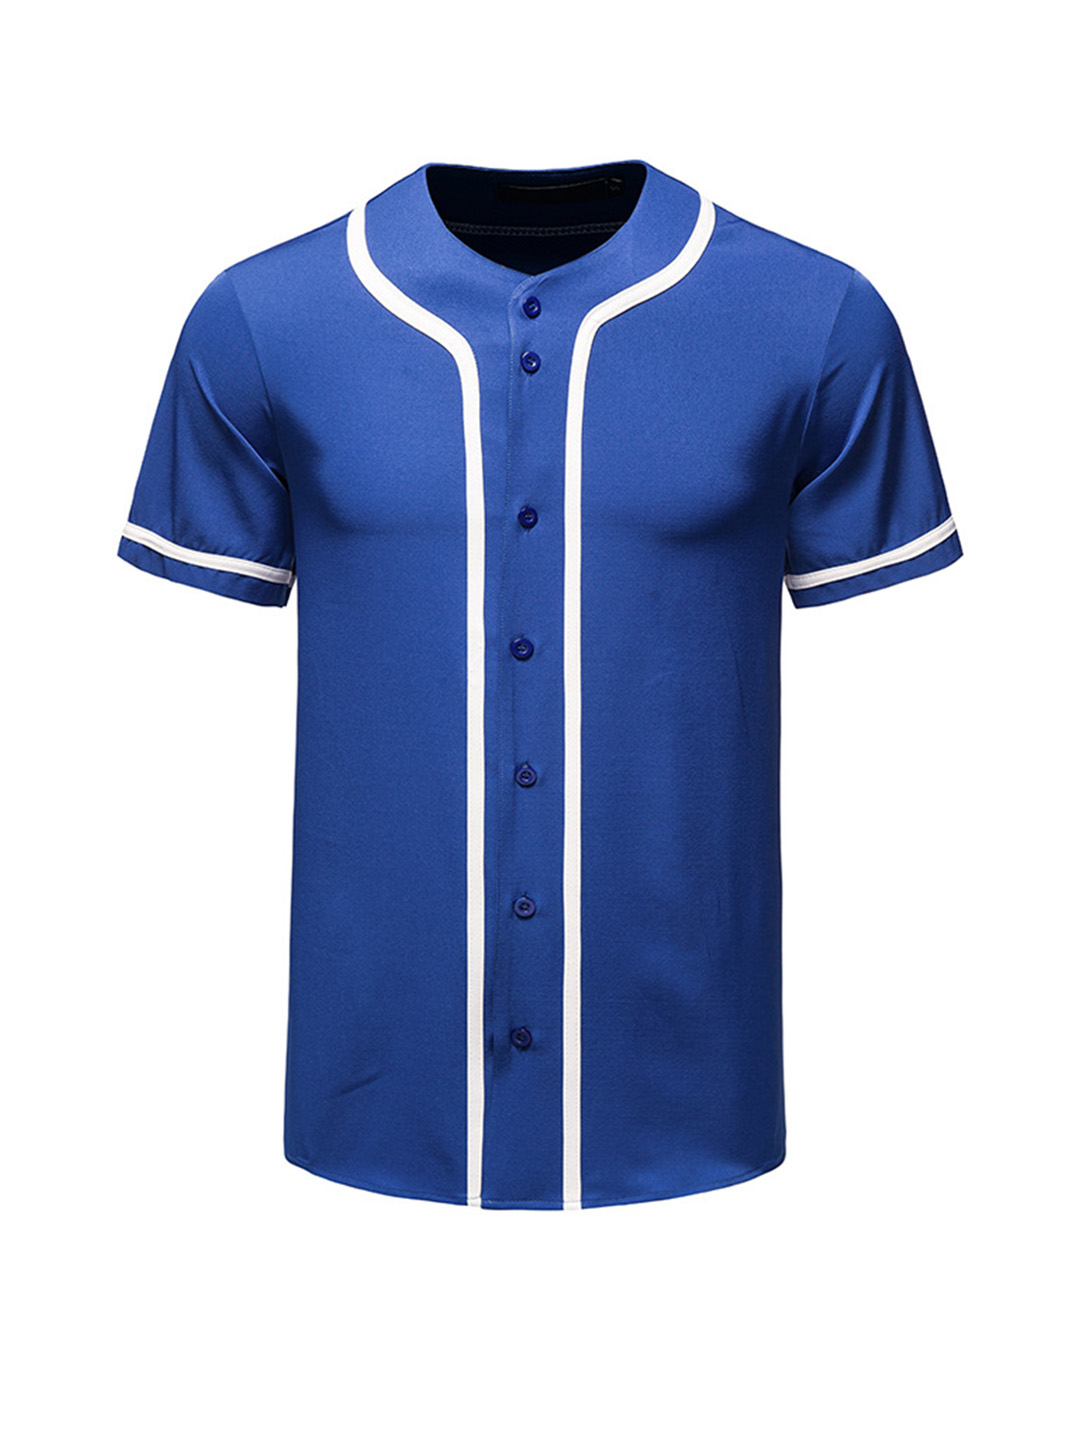 Men's Swisher Baseball Casual Short-sleeved Shirt-poisonstreetwear.com